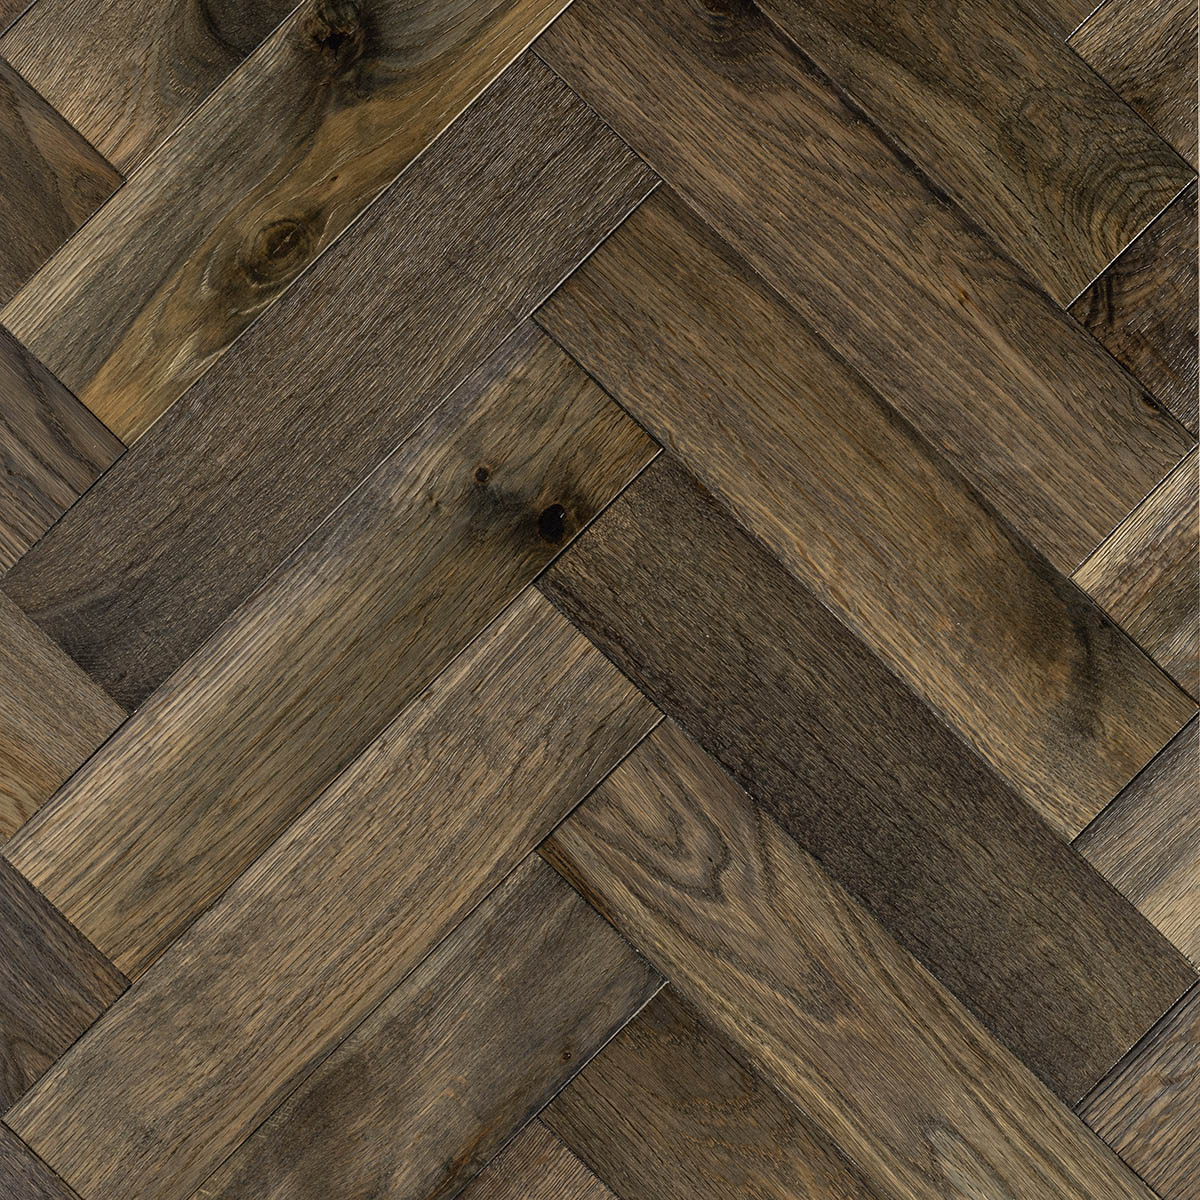 Balfour Grove - Rustic-Grade Oak Herringbone Floor 280mm x 70mm